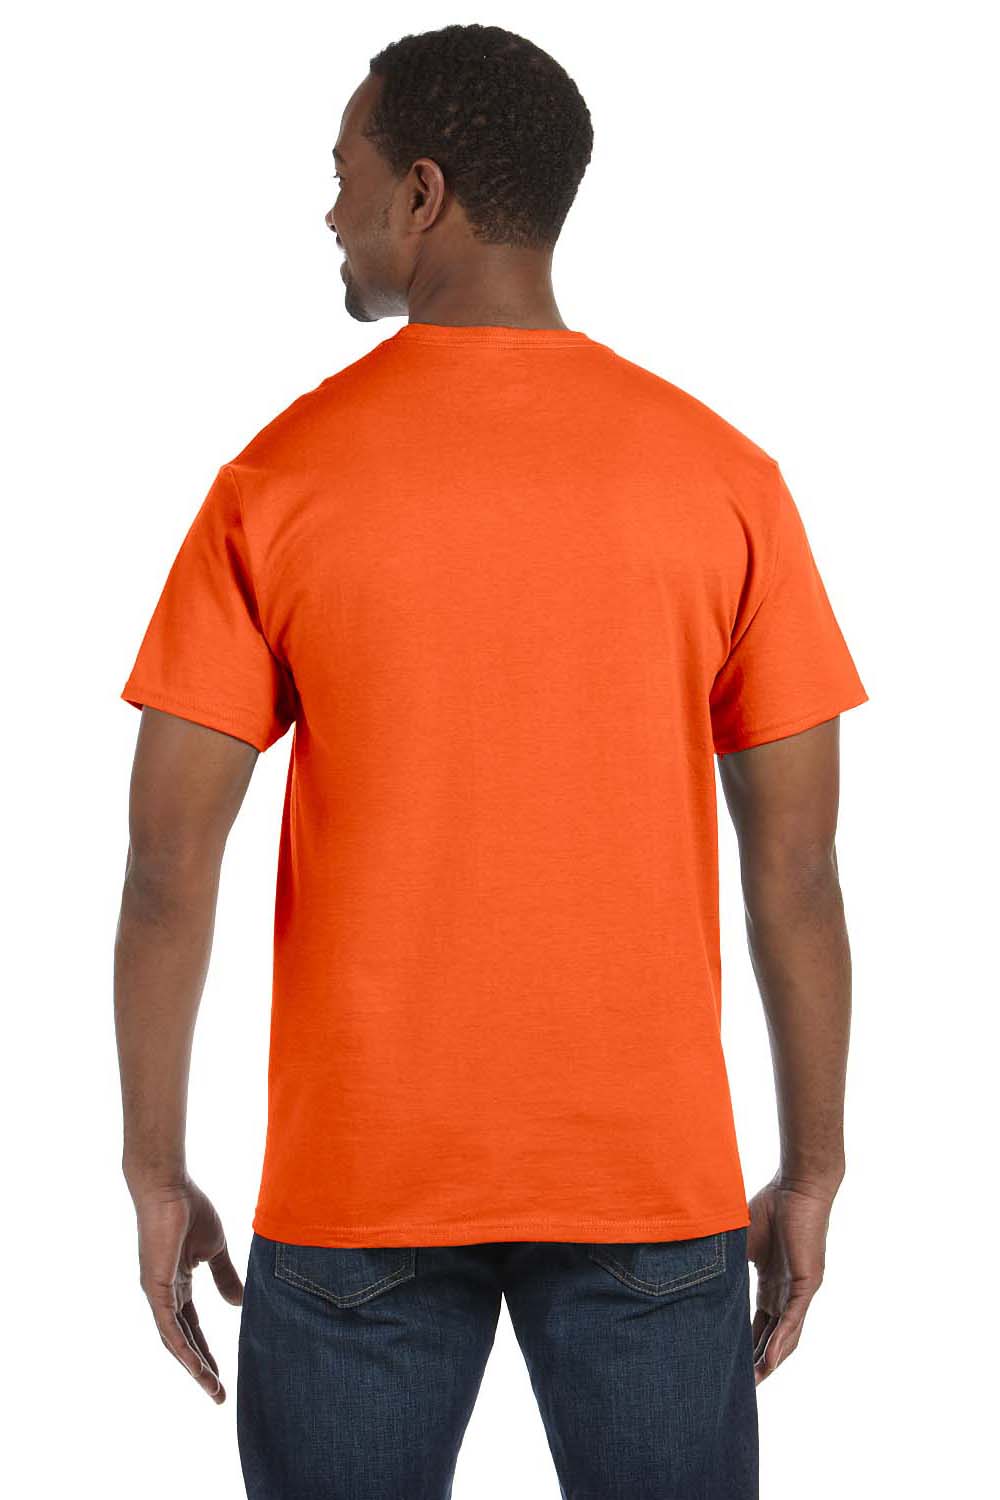 T-Shirt Jerzees Sleeve Crewneck Safety Moisture — Orange 29M/29MR/29MT Mens Wicking Short Dri-Power